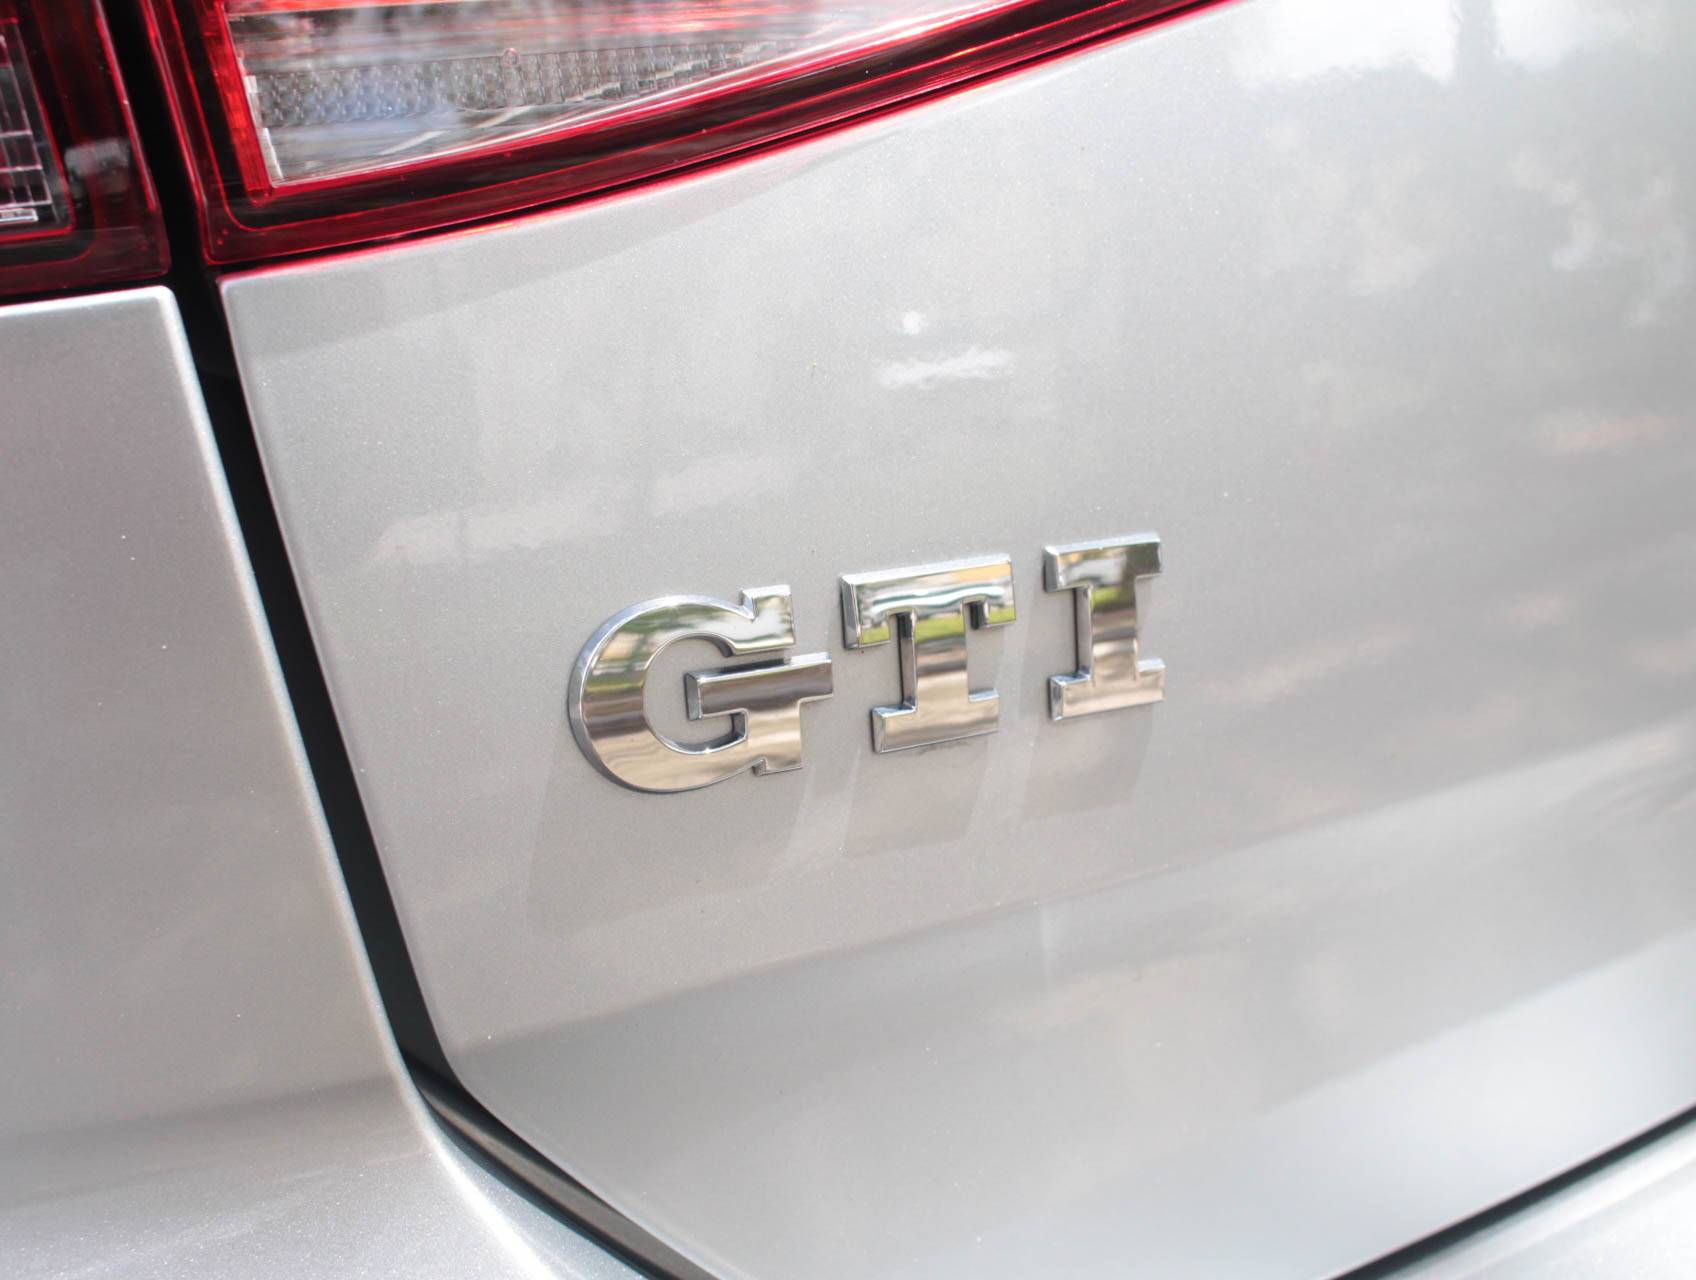 Florida Fine Cars - Used VOLKSWAGEN GTI 2015 MARGATE SE